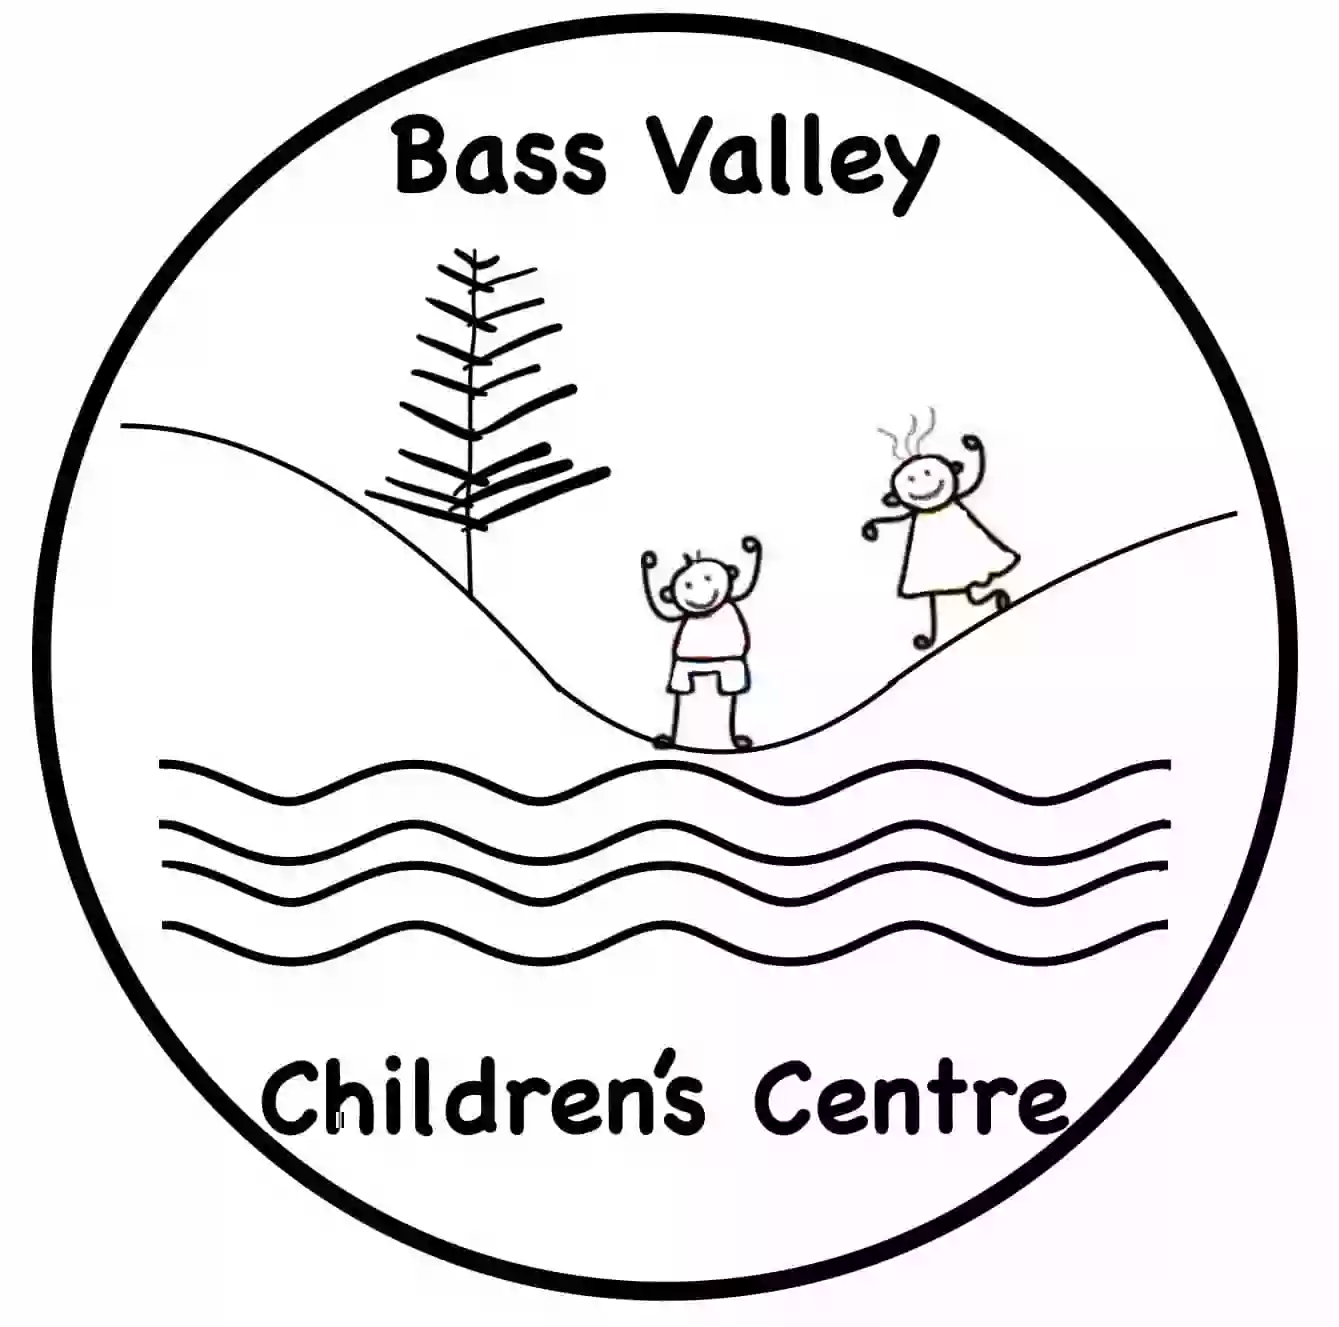 Bass Valley Children's Centre